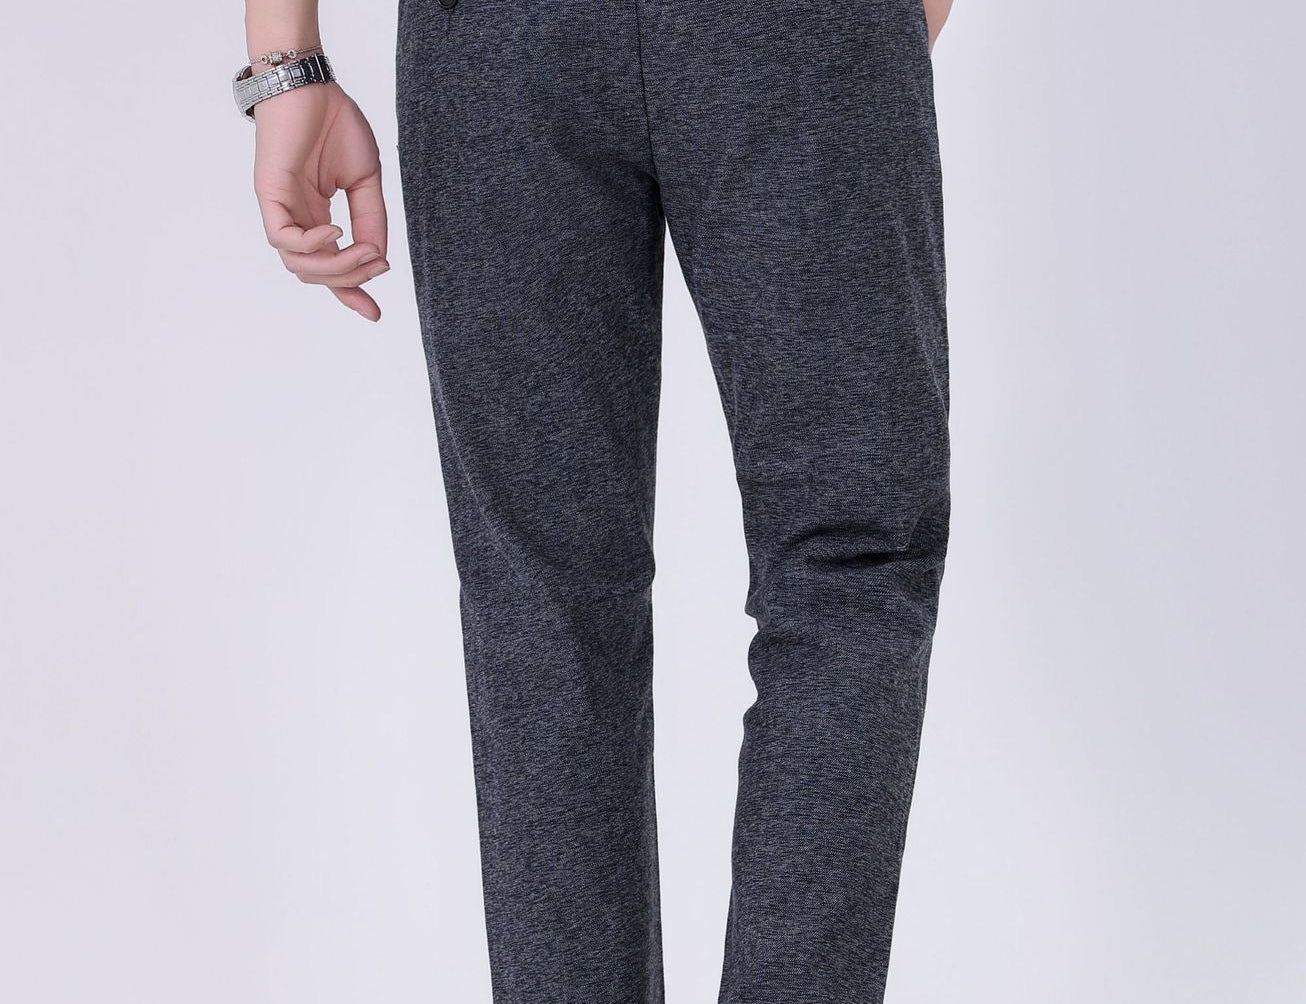 Wazima - Pants for Men - Sarman Fashion - Wholesale Clothing Fashion Brand for Men from Canada